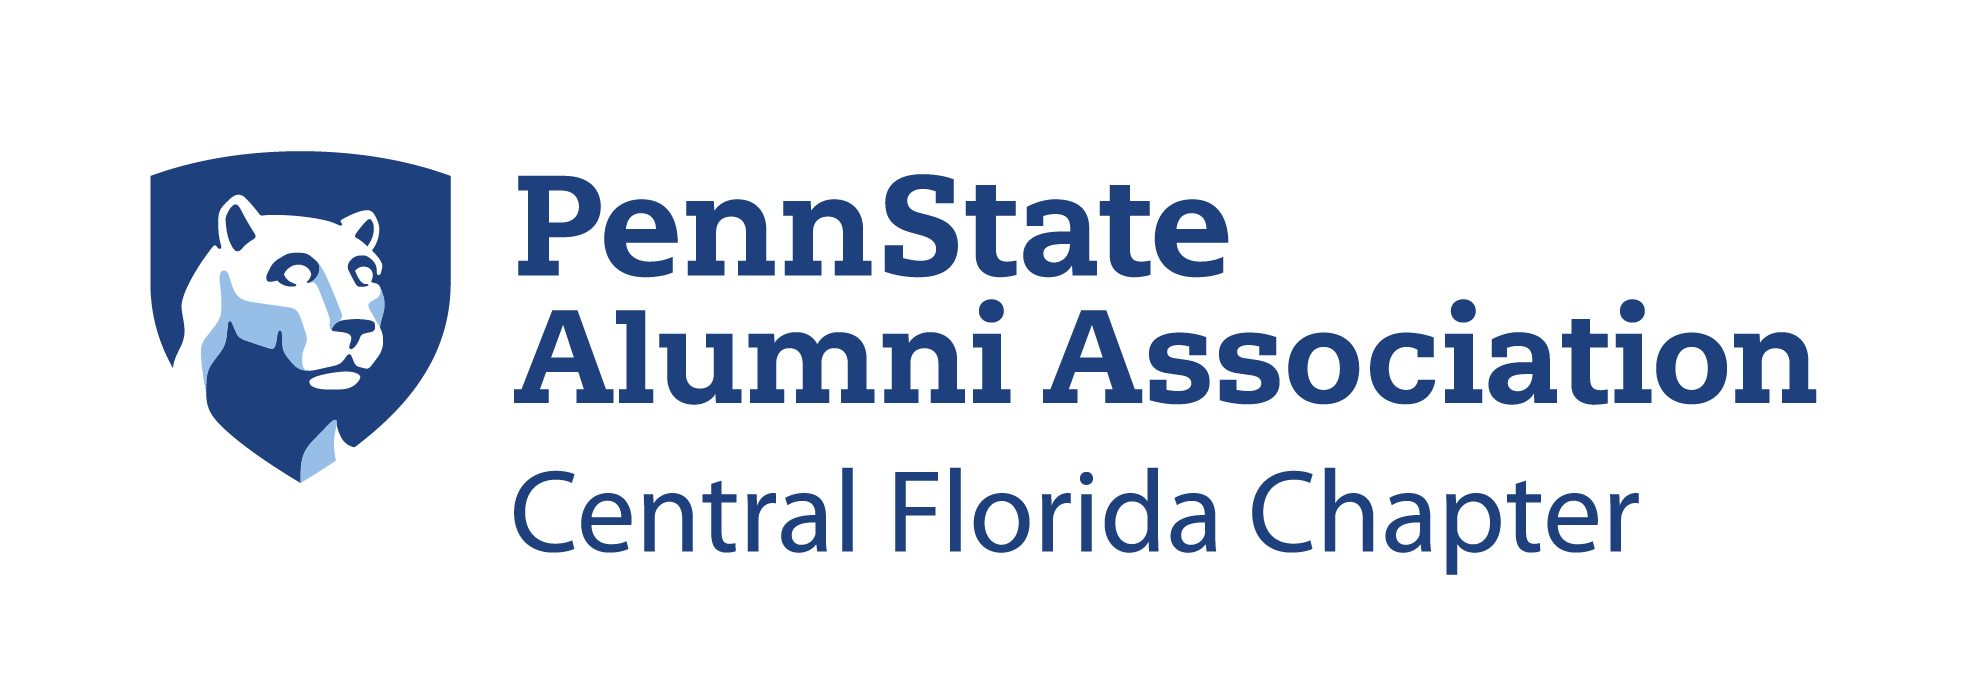 Penn State Alumni Association, Central Florida Chapter